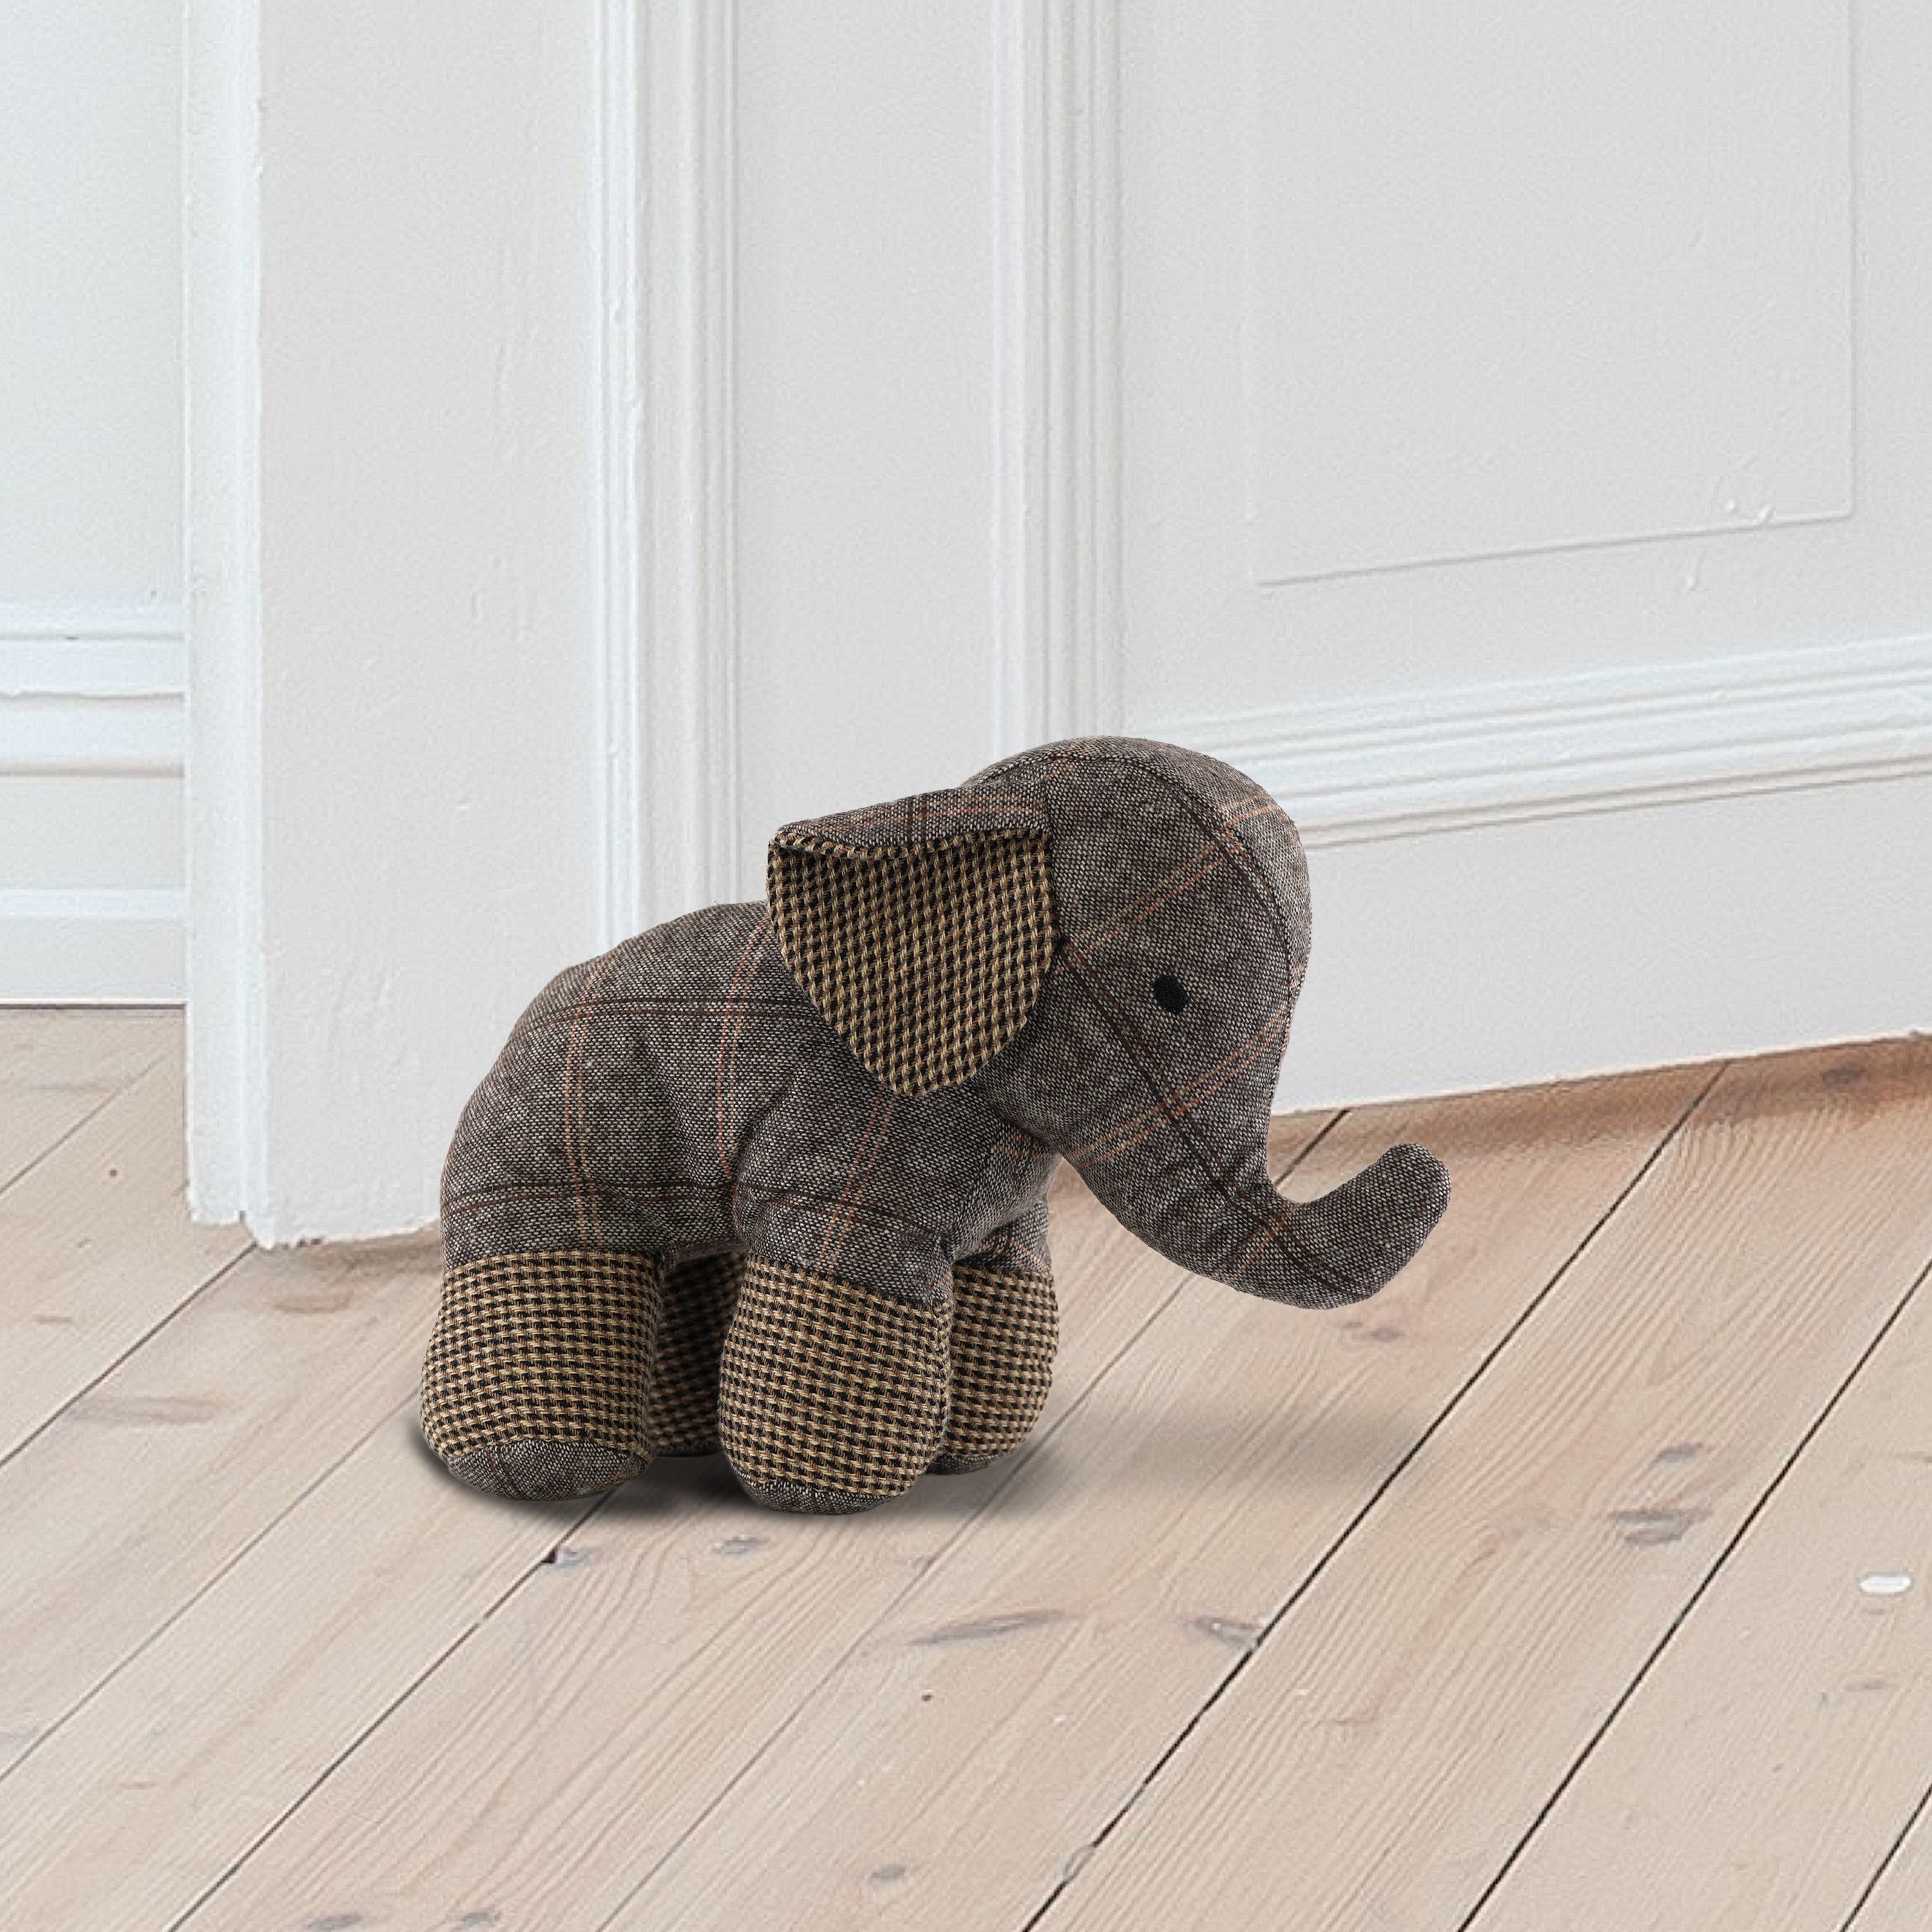 Tartan Elephant Door Stops The Magic Toy Shop - The Magic Toy Shop